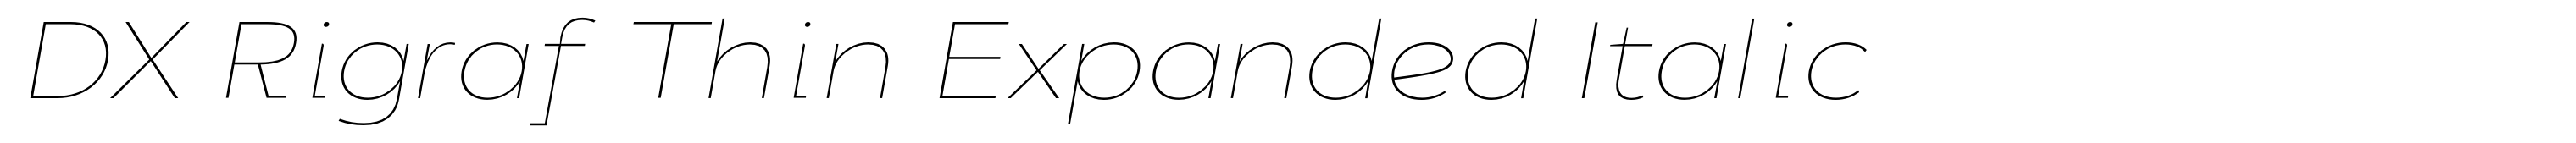 DX Rigraf Thin Expanded Italic